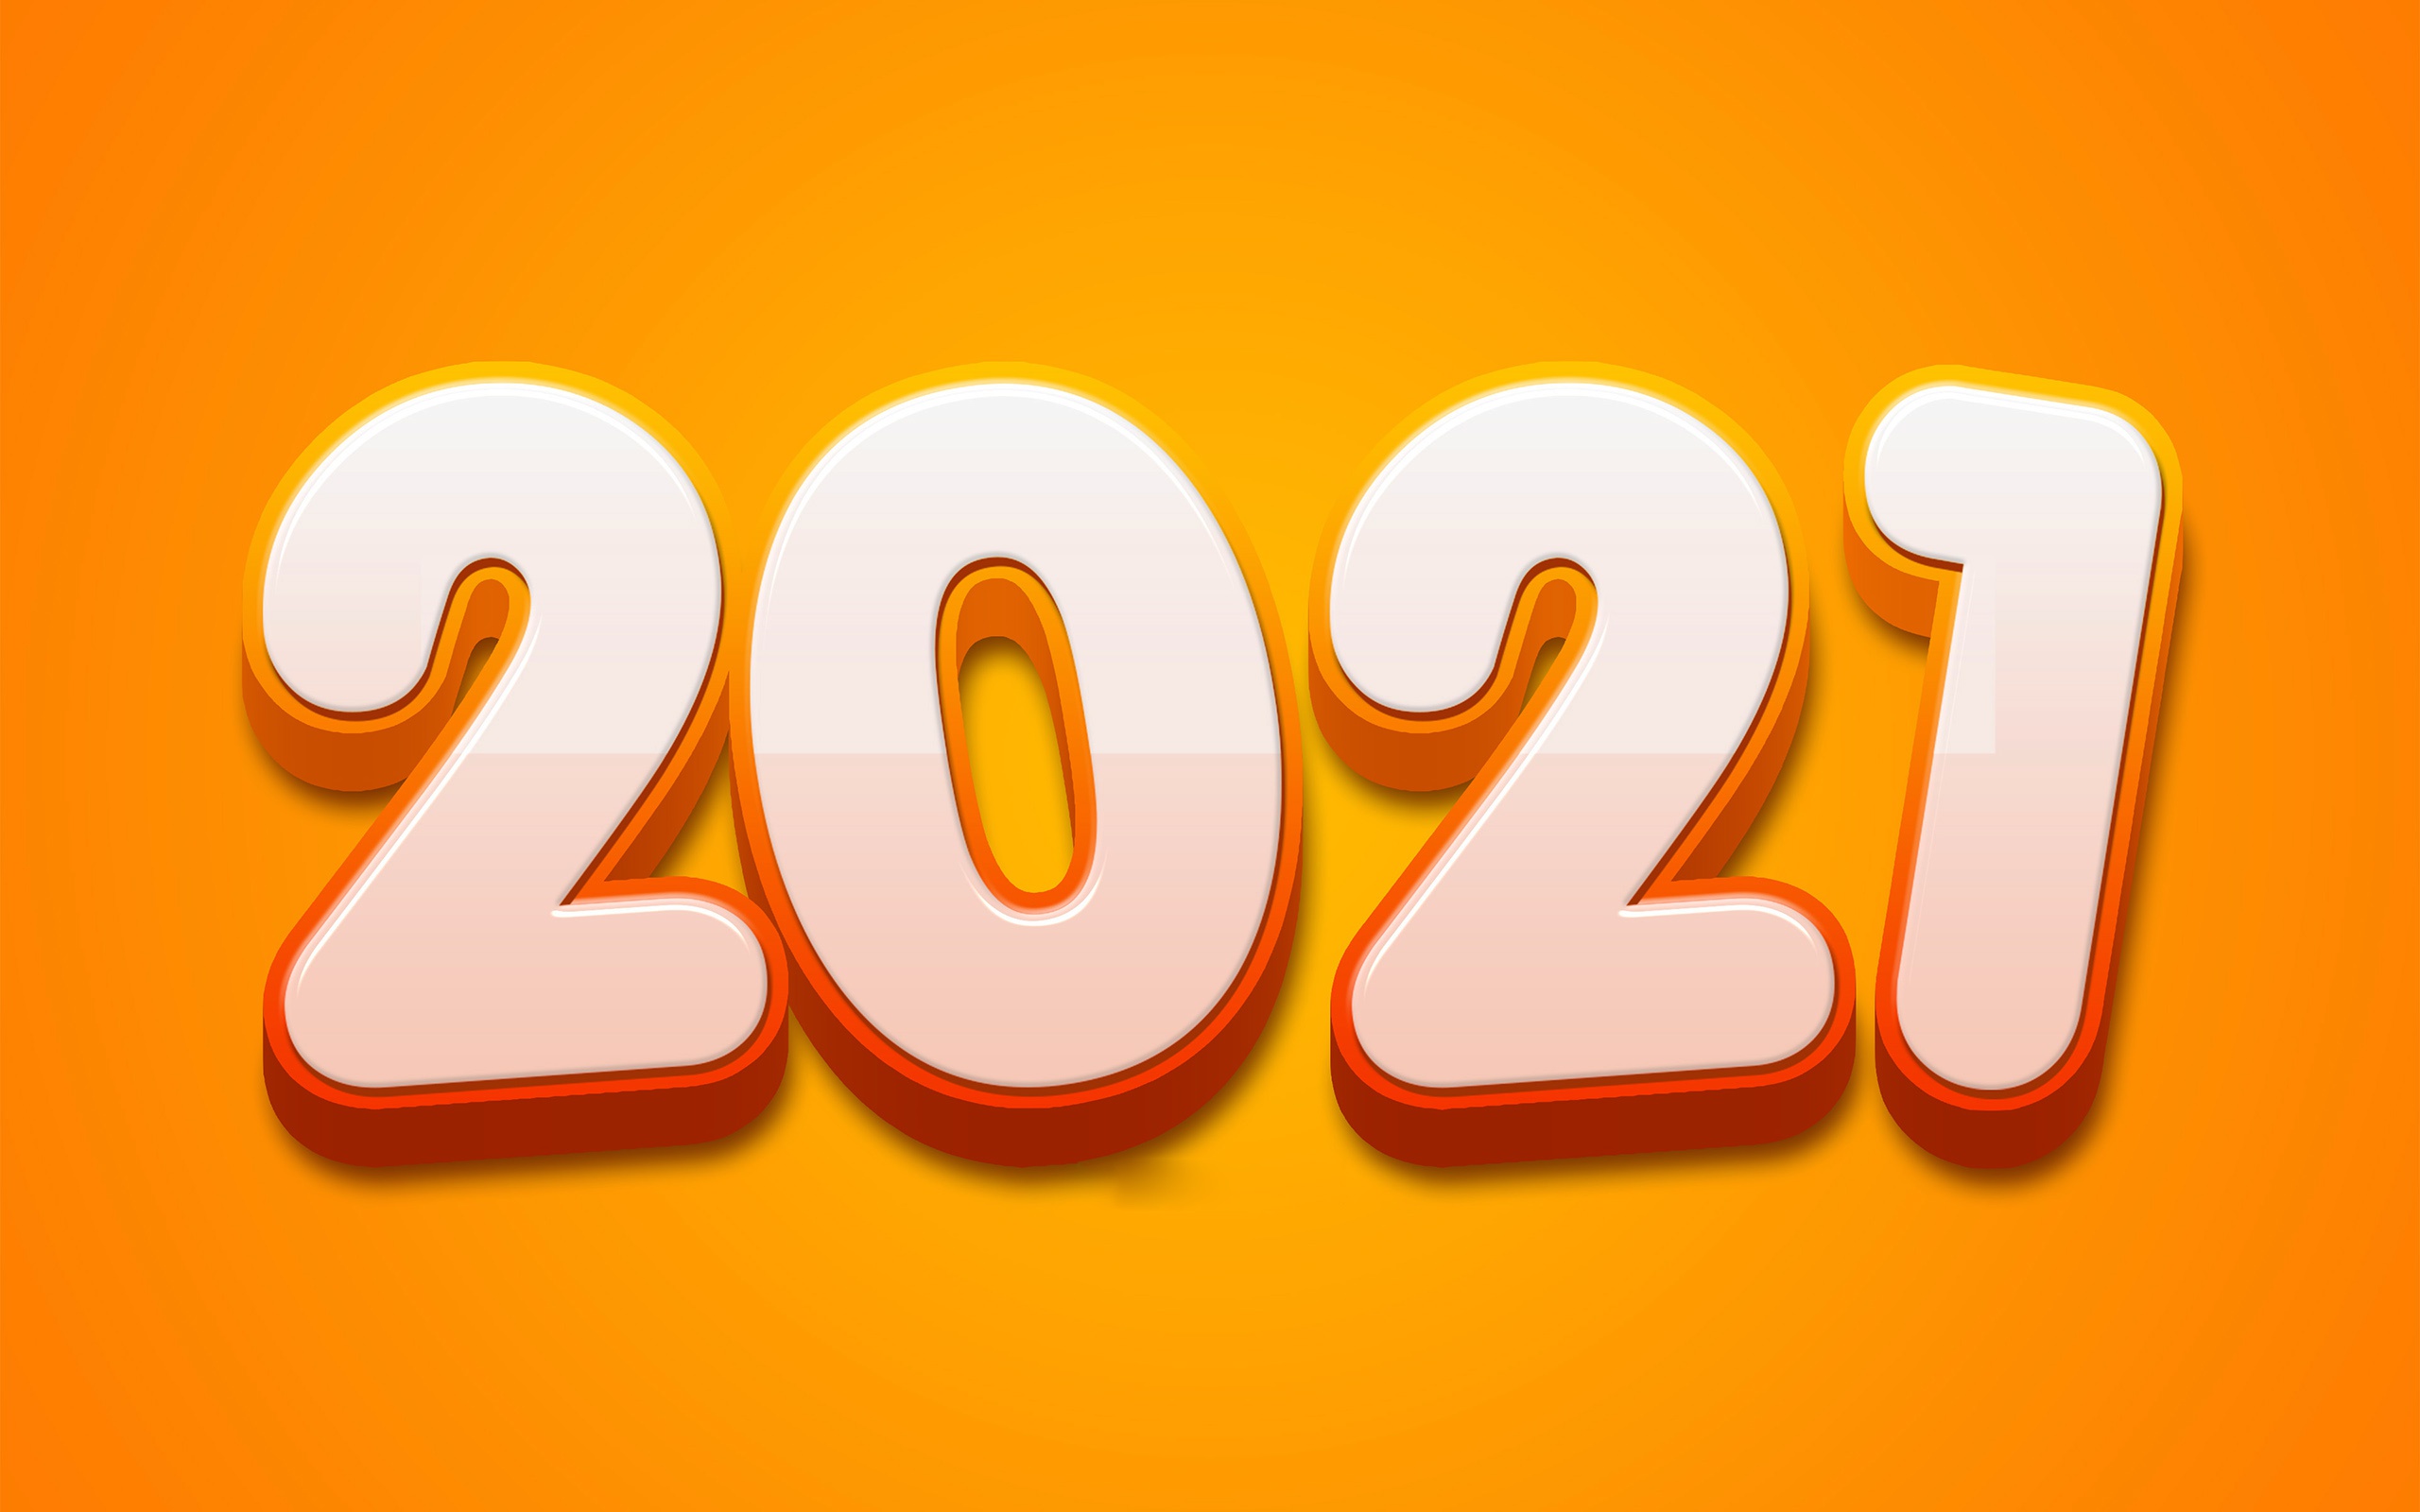 Тест новый год 2021. 2021 Год. Картинка 2021 год. Новый год 2021. 2021 Год цифры.